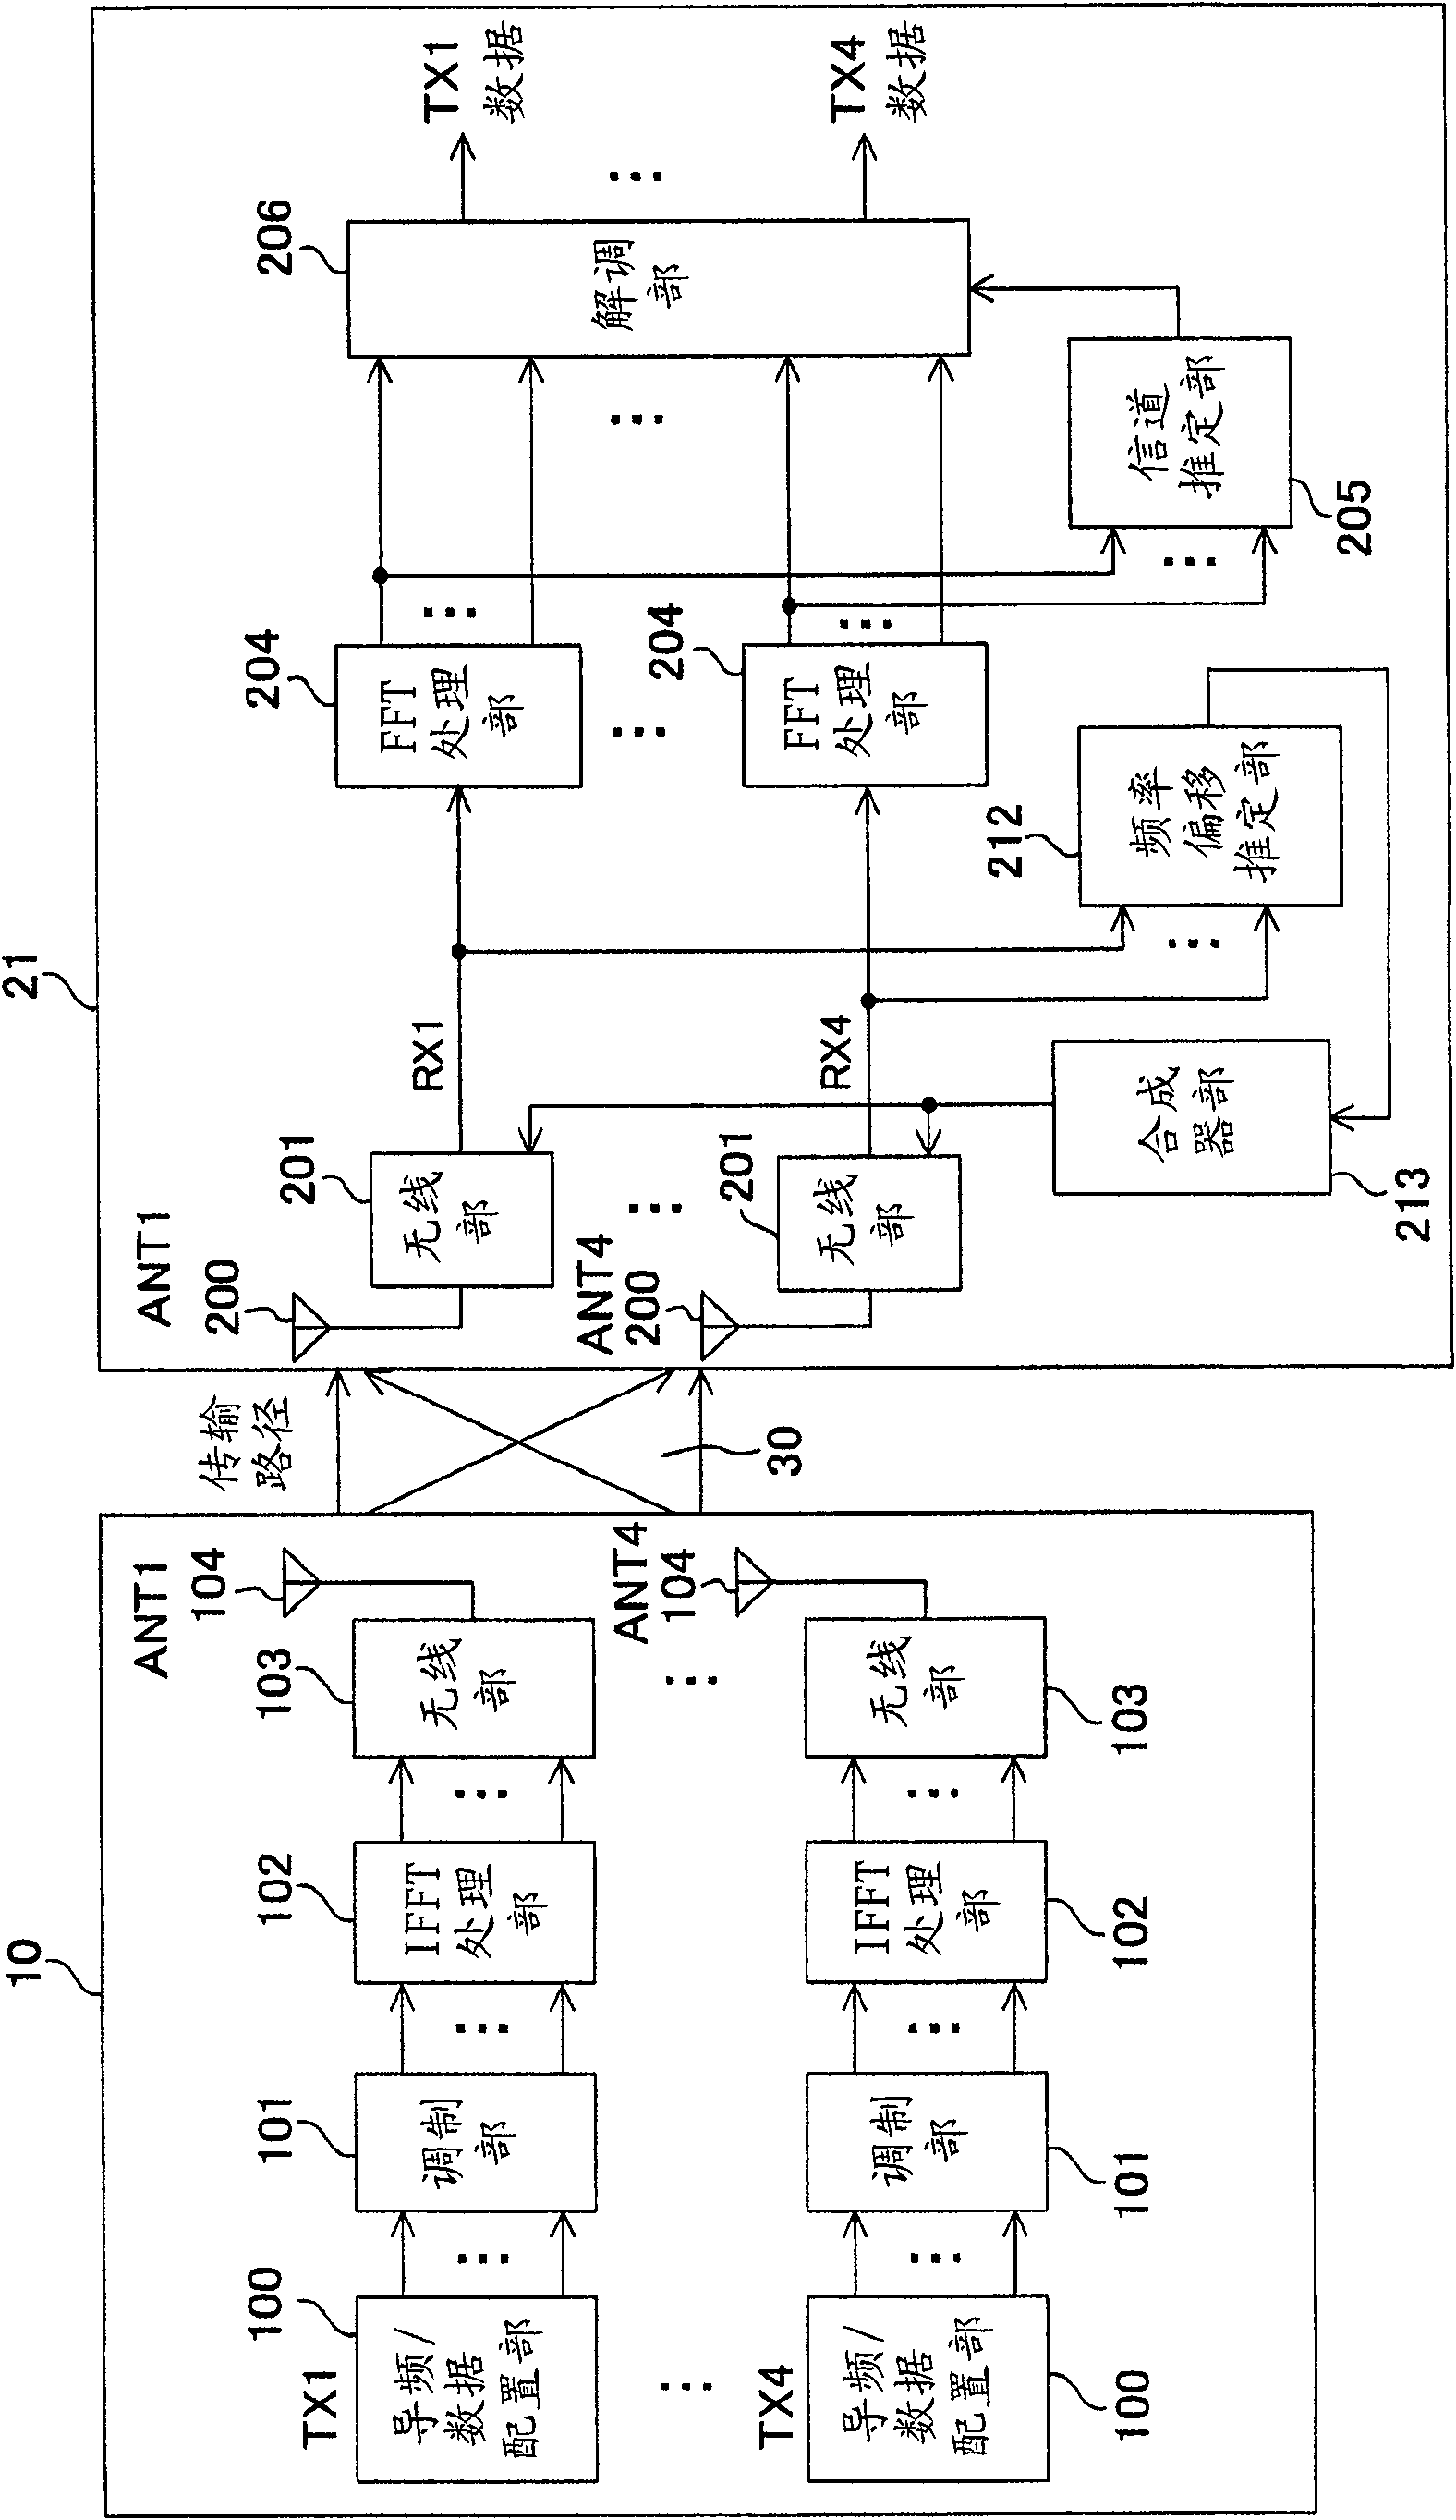 OFDM transmitter and OFDM receiver